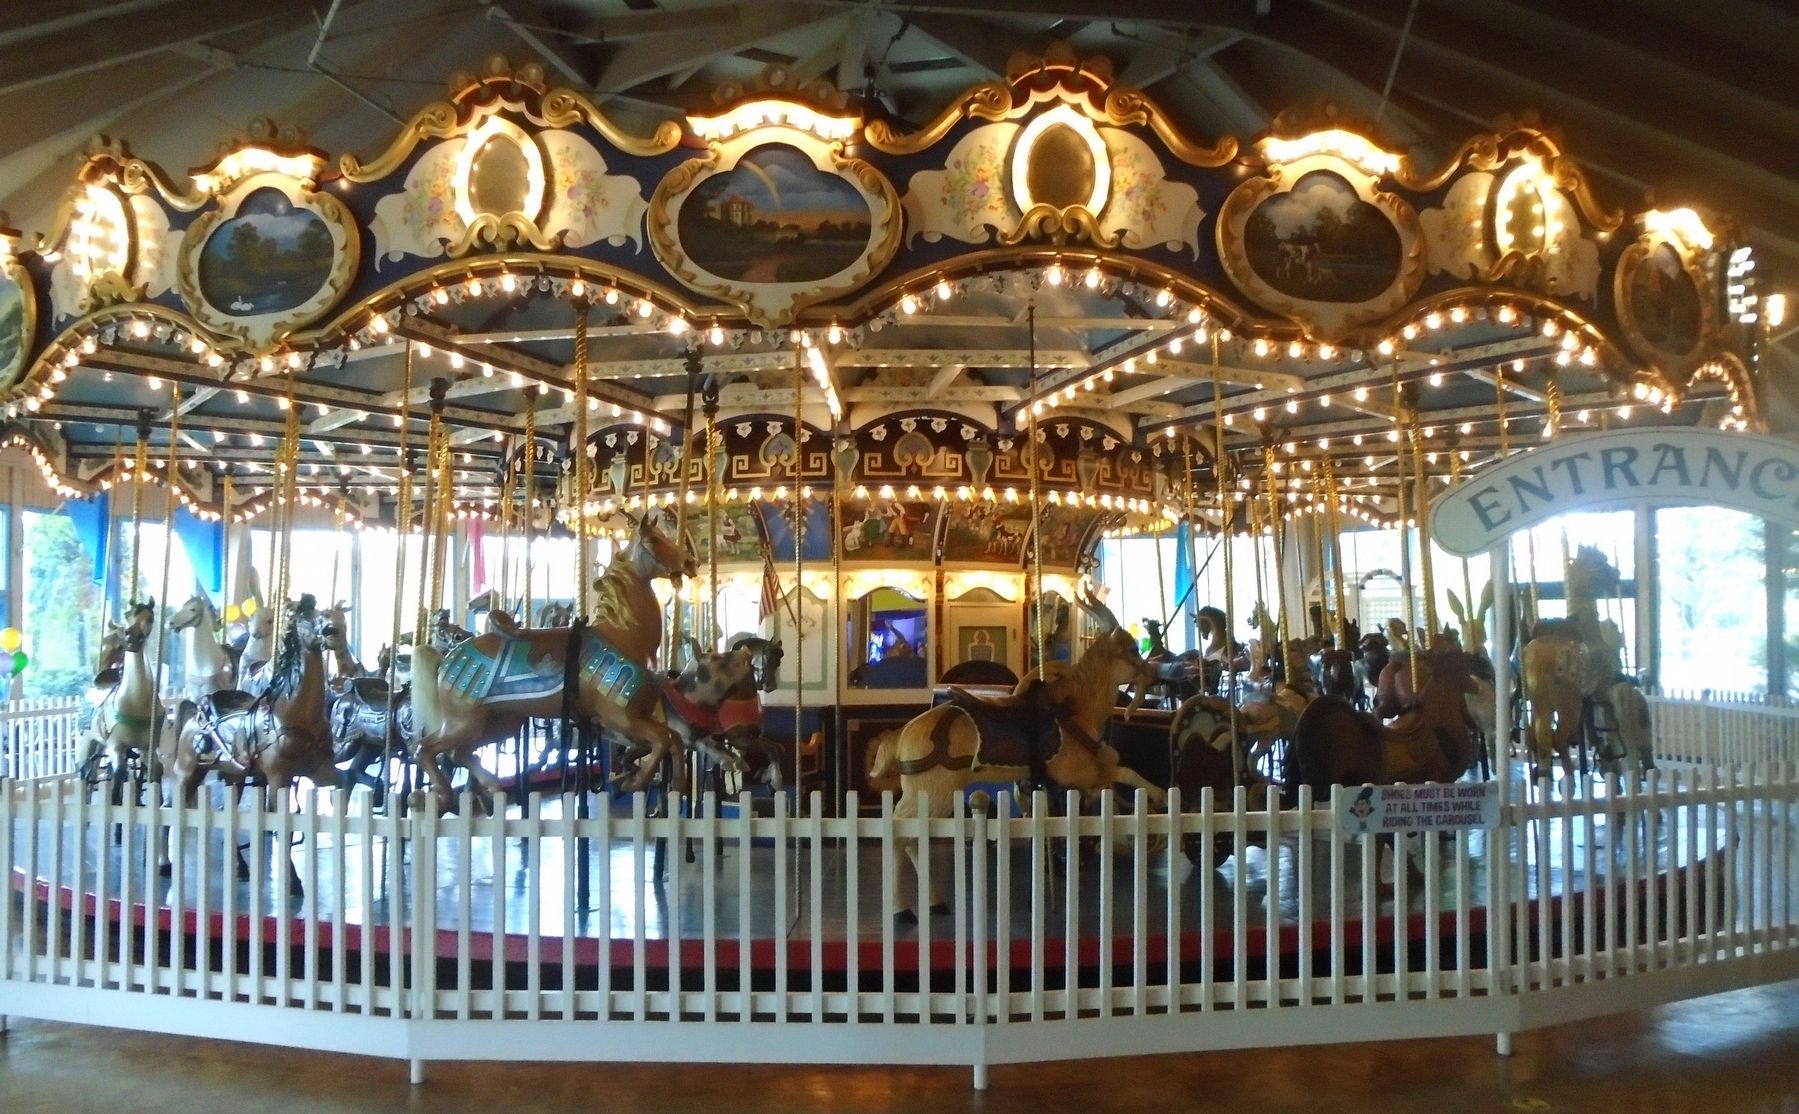 Philadelphia Toboggan Company Carousel #59 at Giggleberry Fair image. Click for full size.